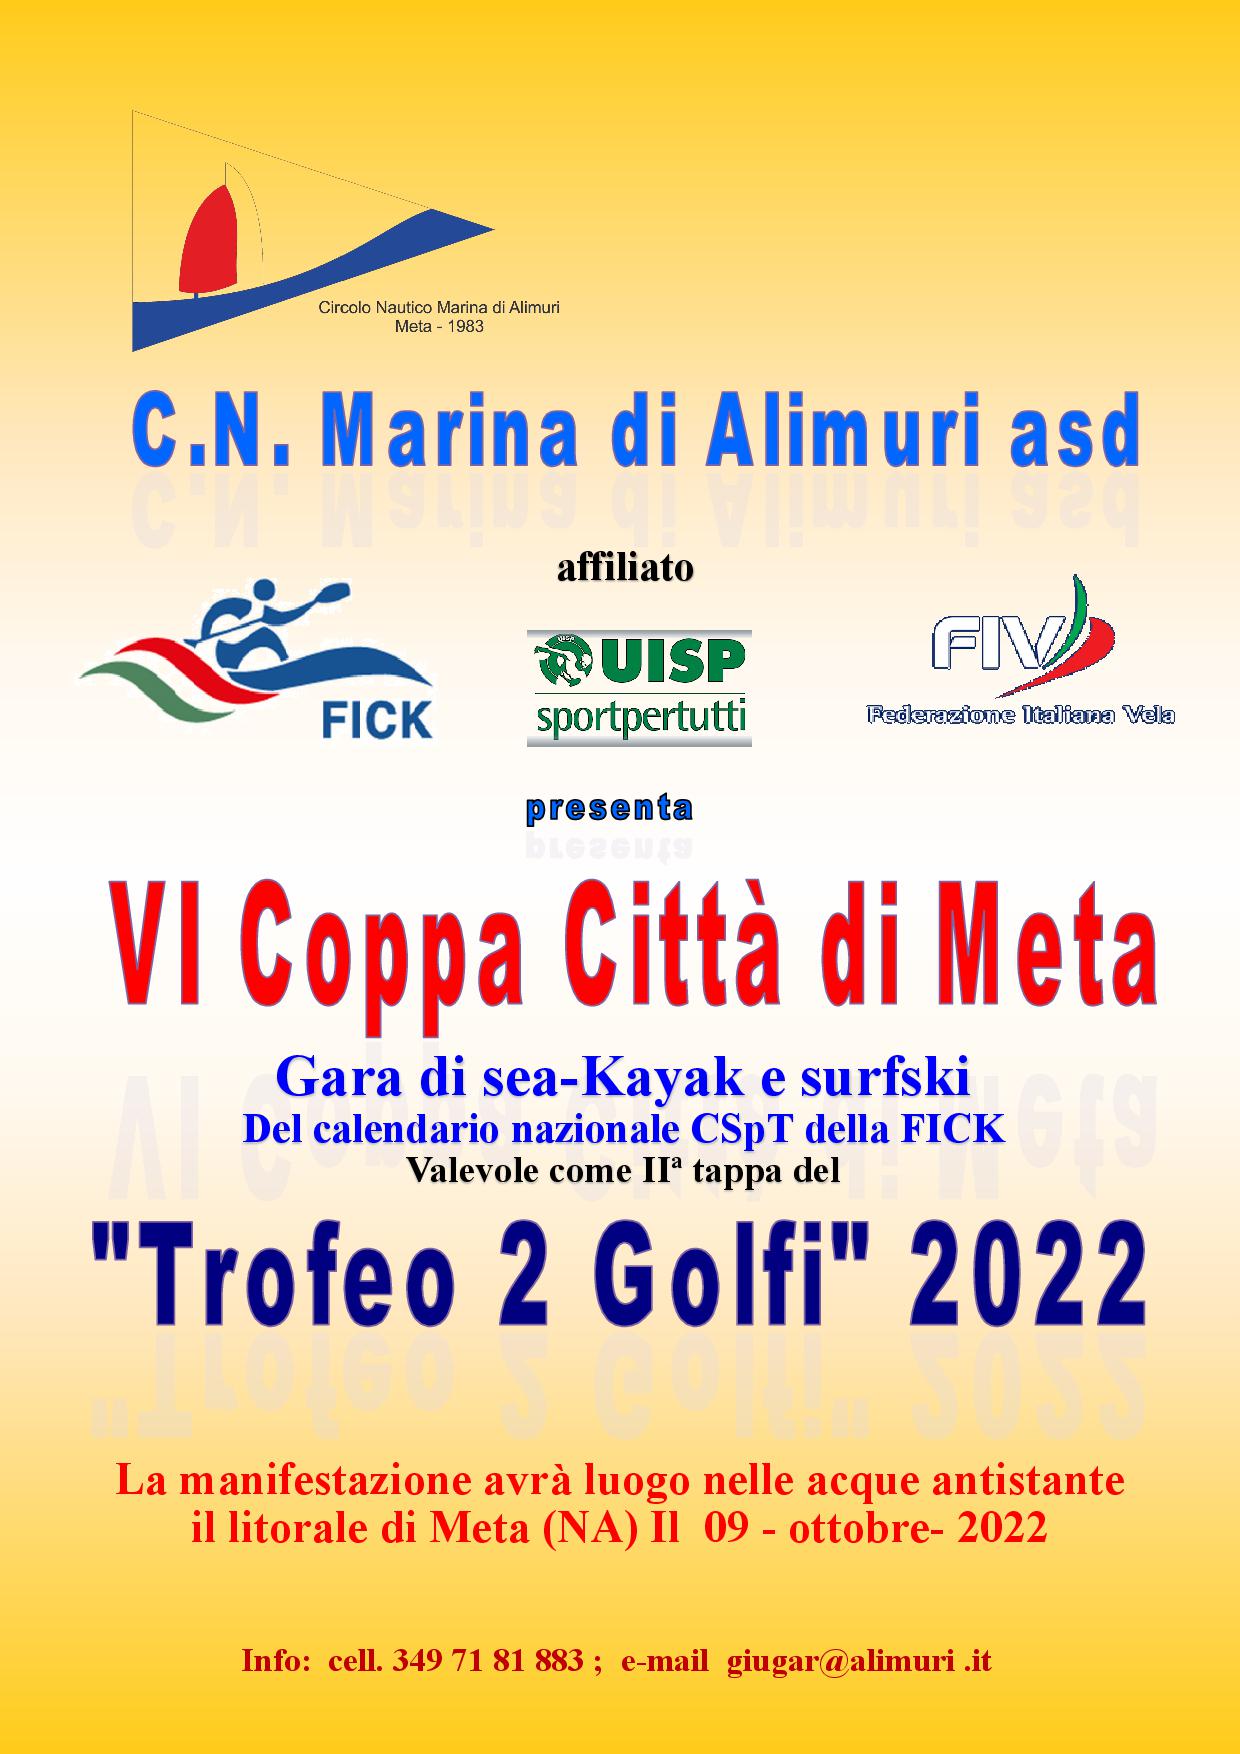 images/comitatiregionali/campania/Seconda_tappa_Trofeo_dei_Due_Golfi.jpg